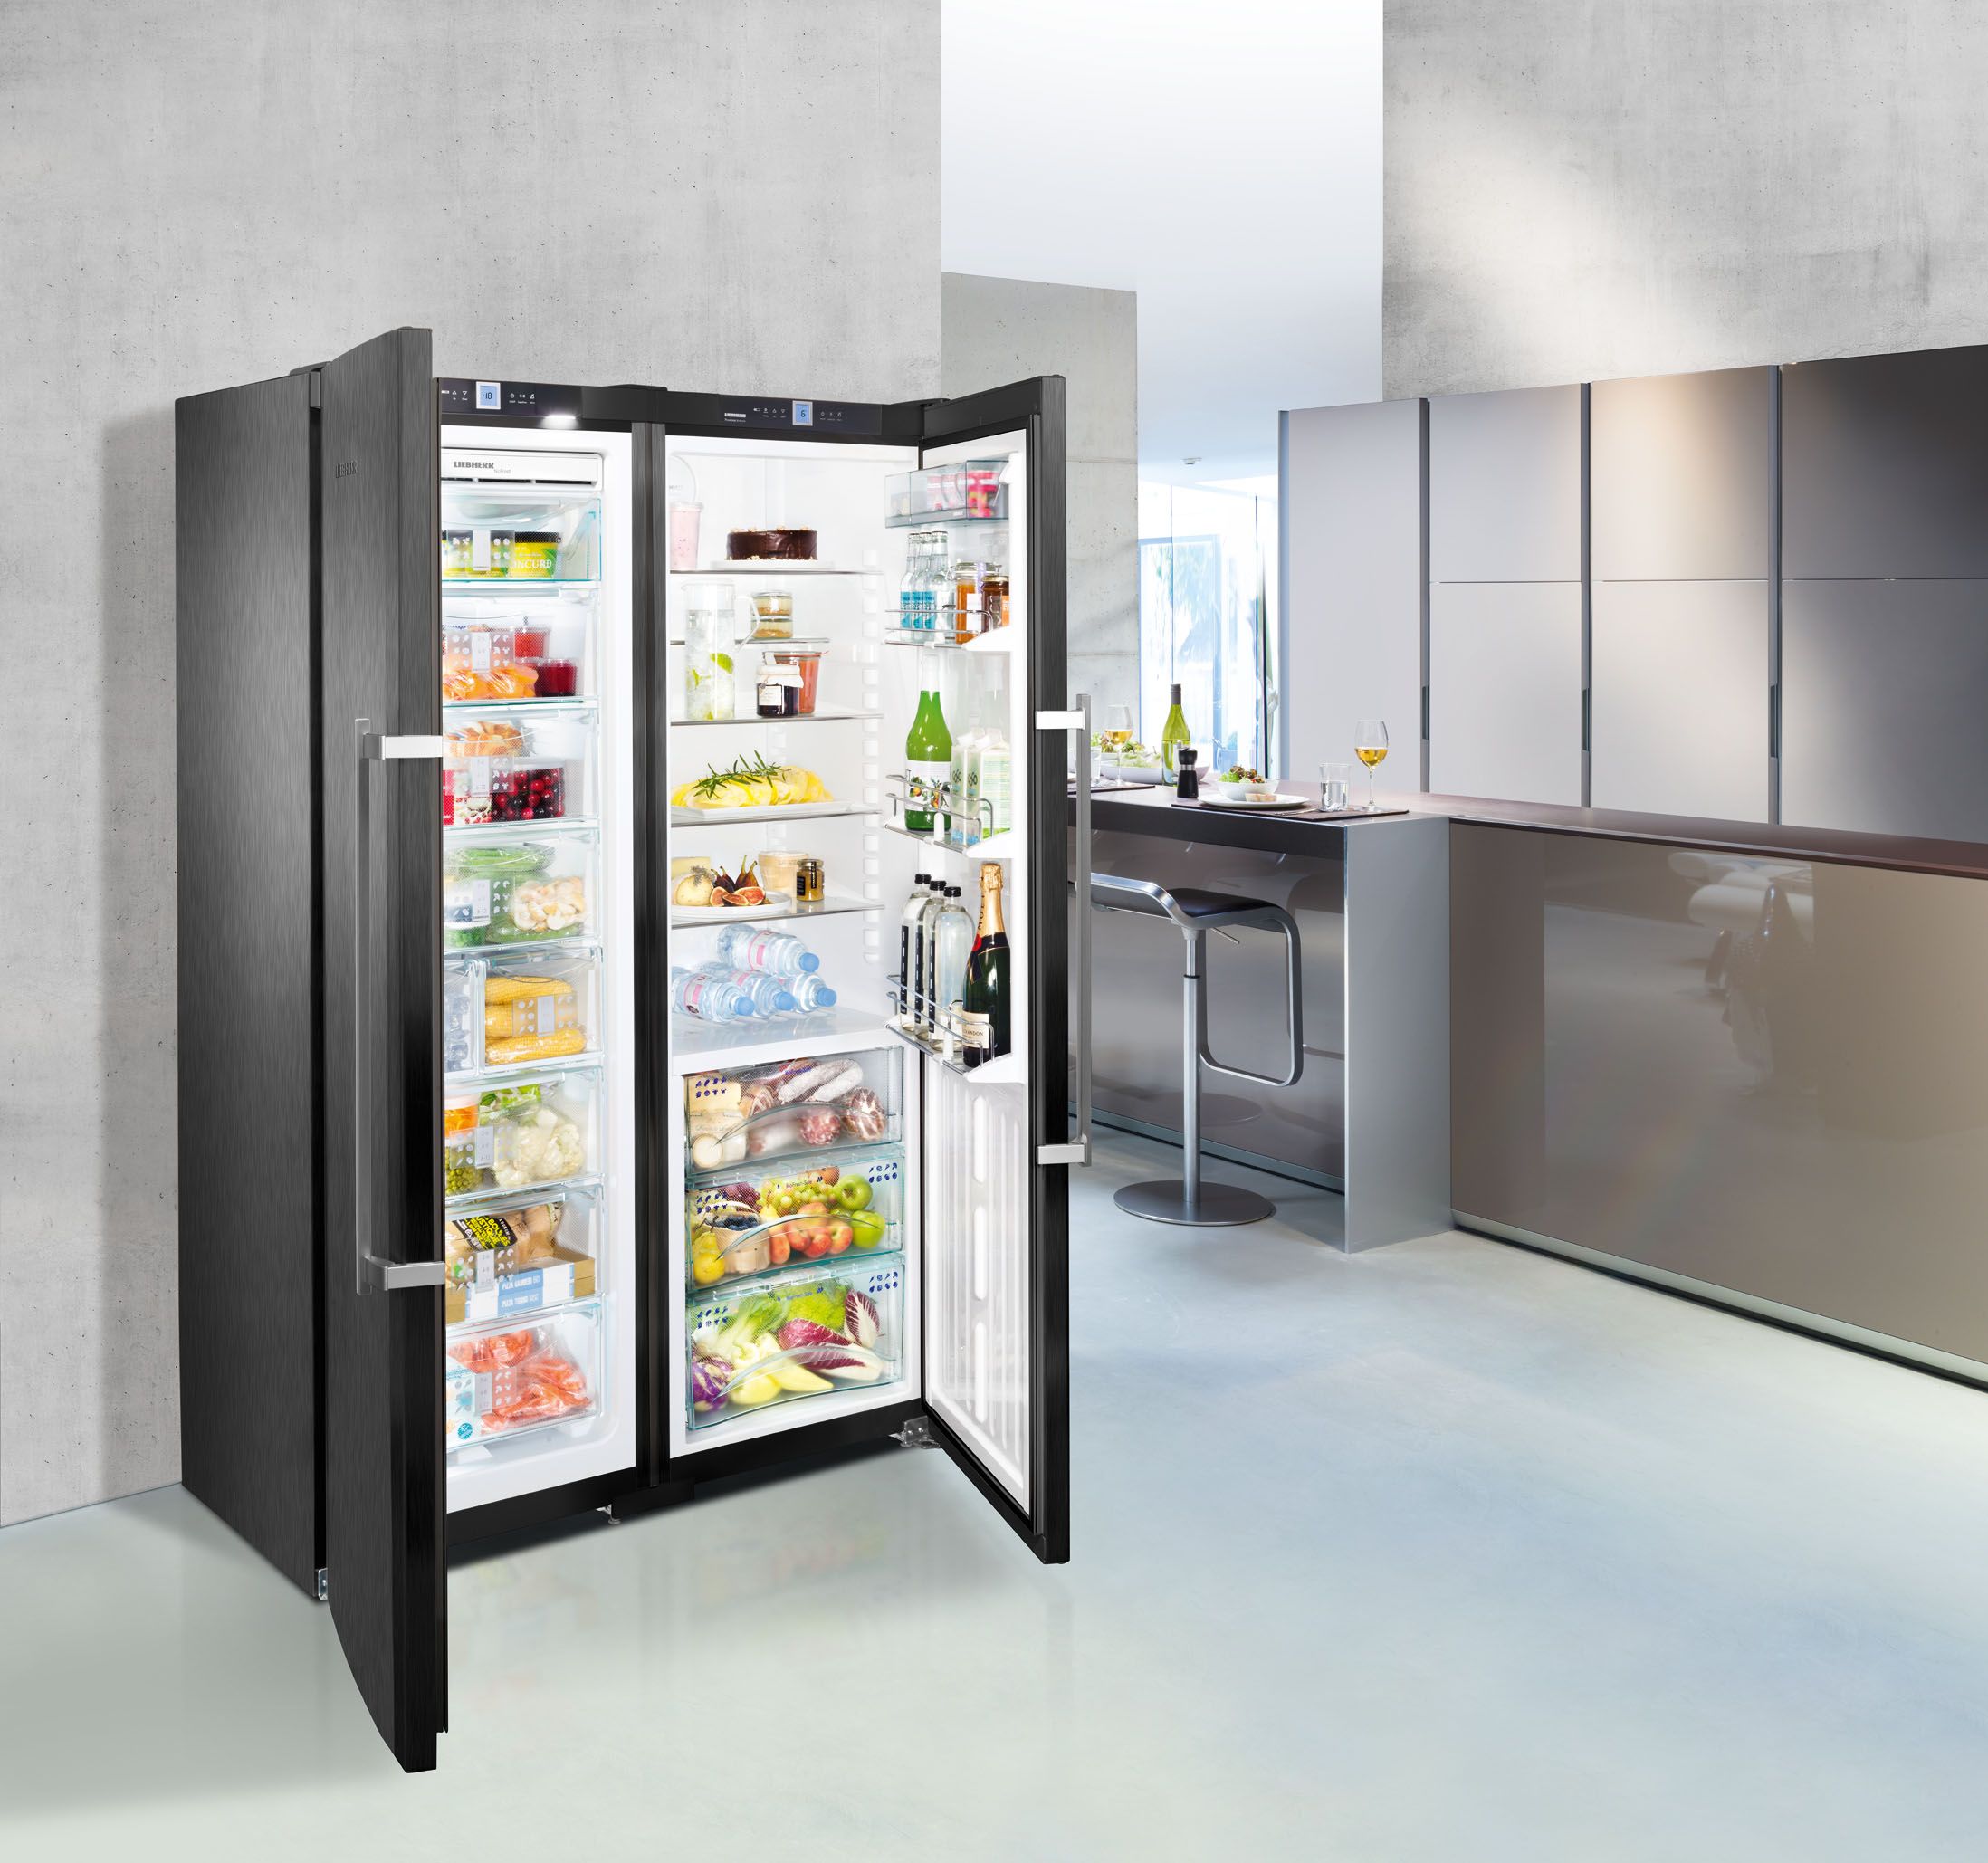 LG Refrigerator Service Center Andheri